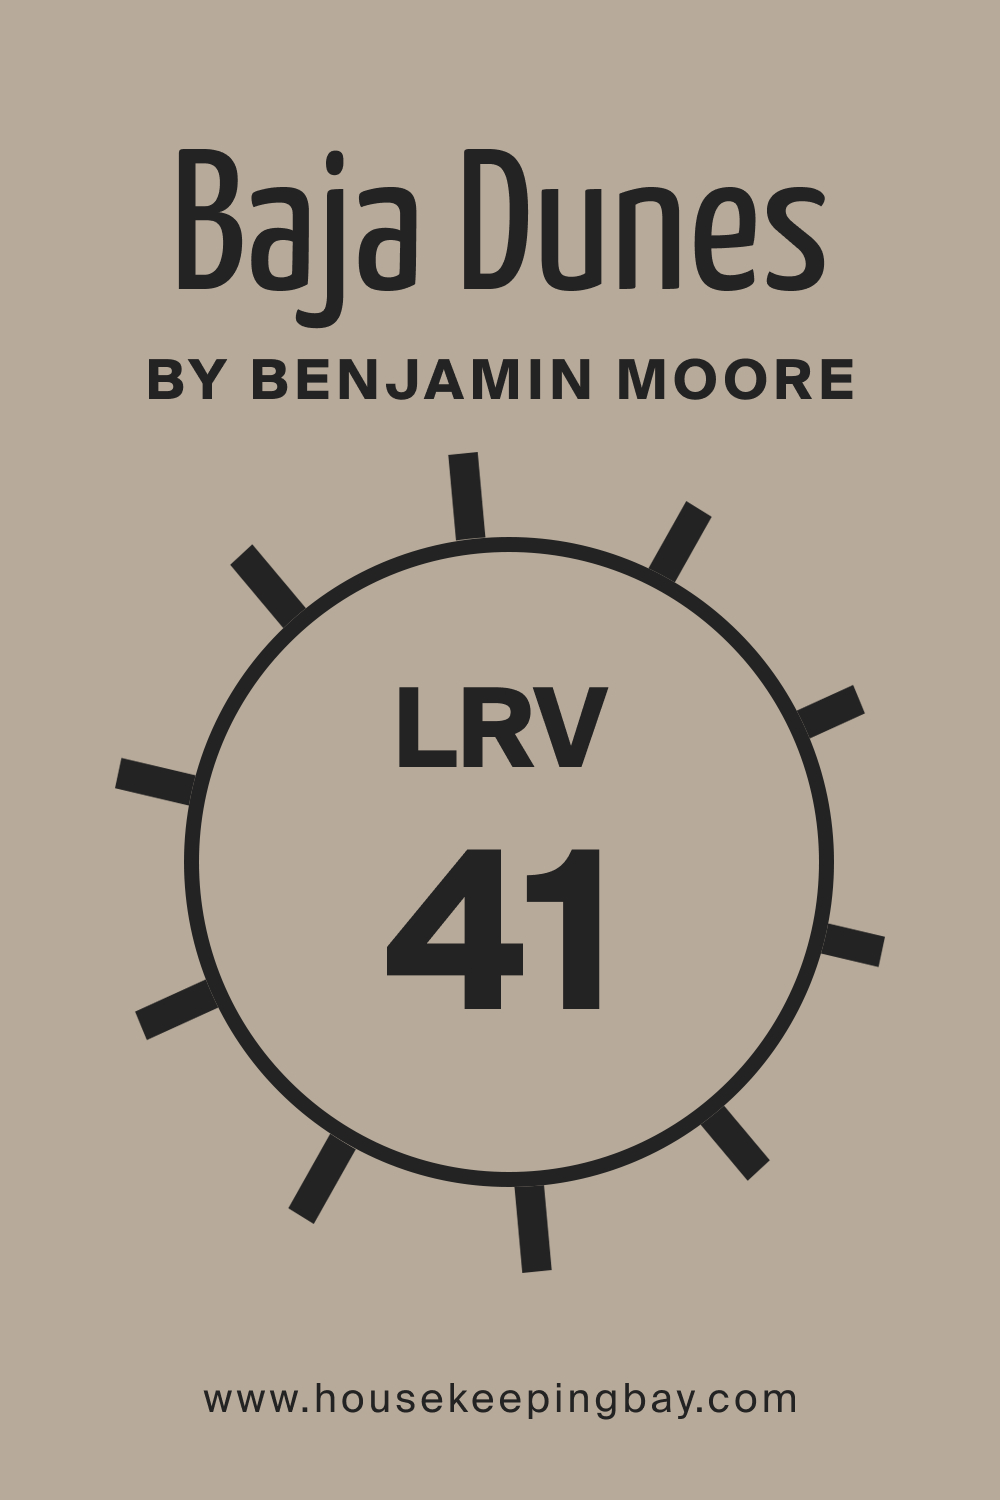 BM Baja Dunes 997 by Benjamin Moore. LRV – 41